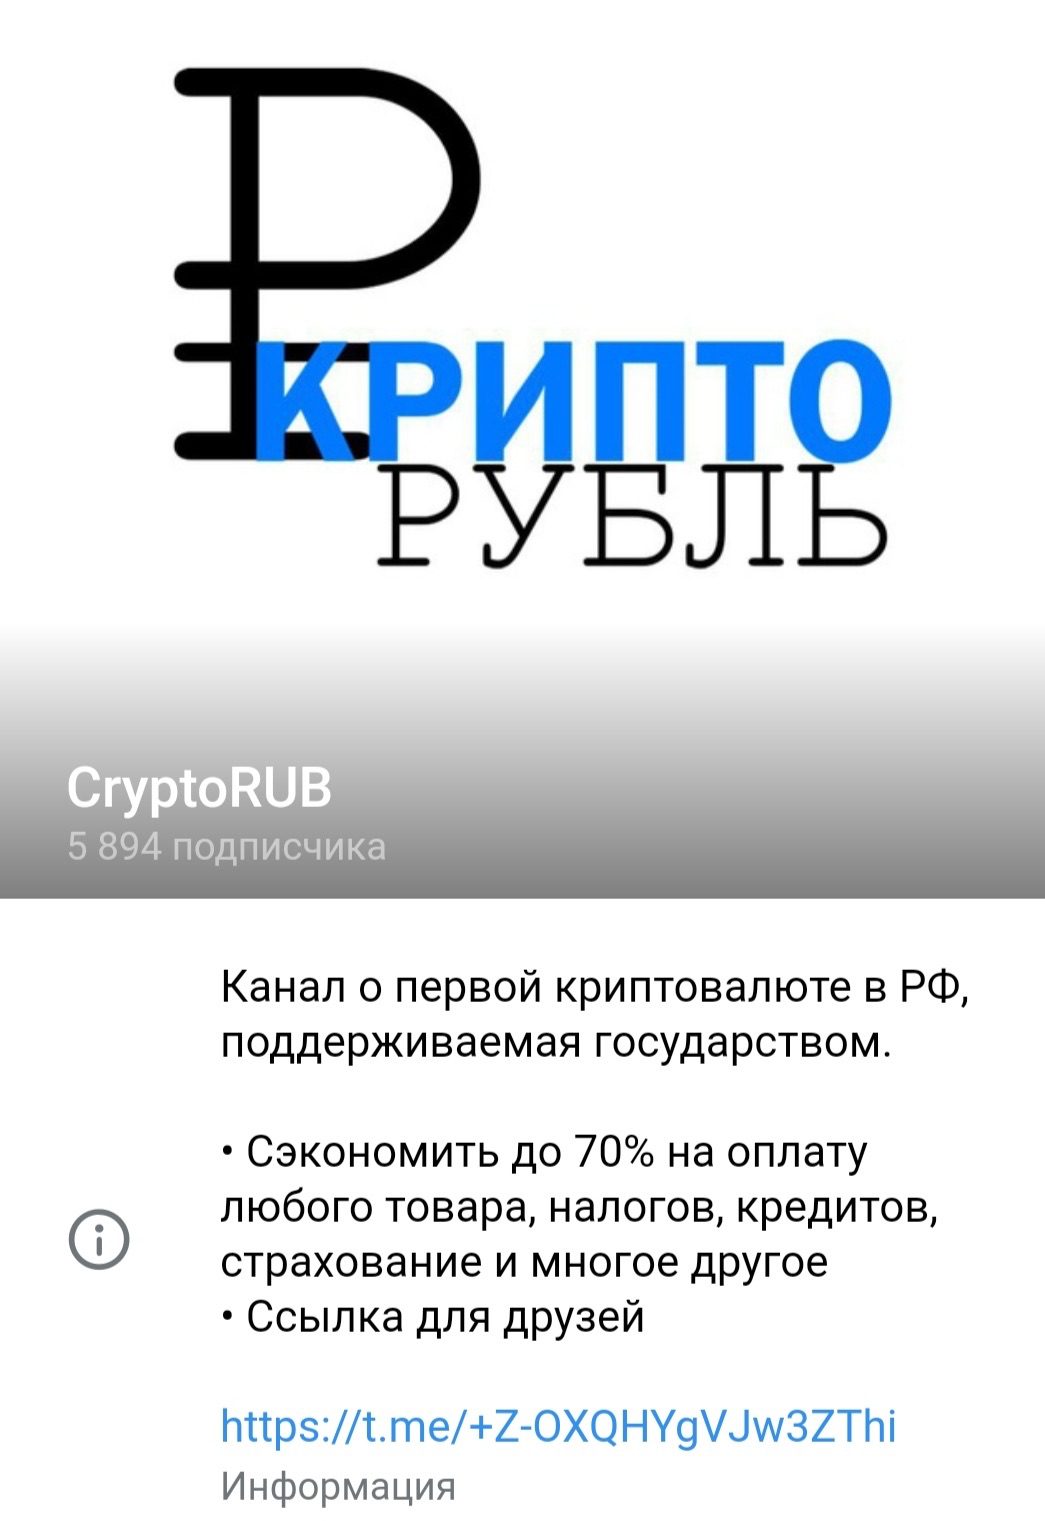 Телеграм-канал CryptoRUB